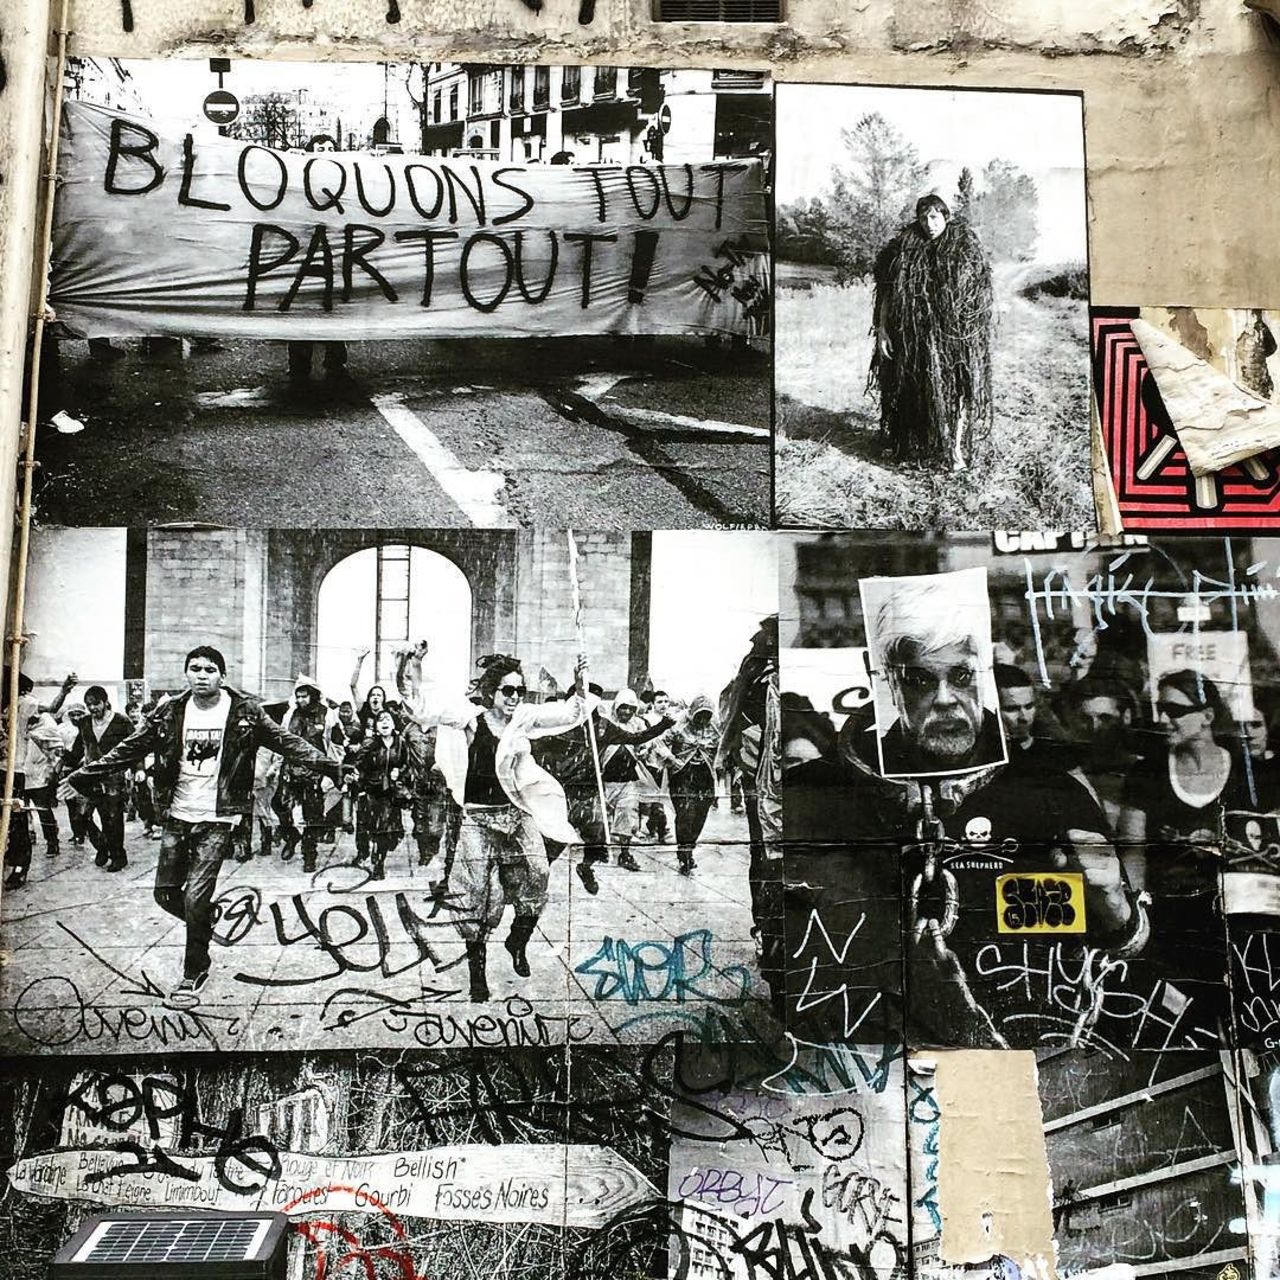 #Paris #graffiti photo by @elricoelmagnifico http://ift.tt/1PIXNEF #StreetArt https://t.co/hHKzpmE5tE